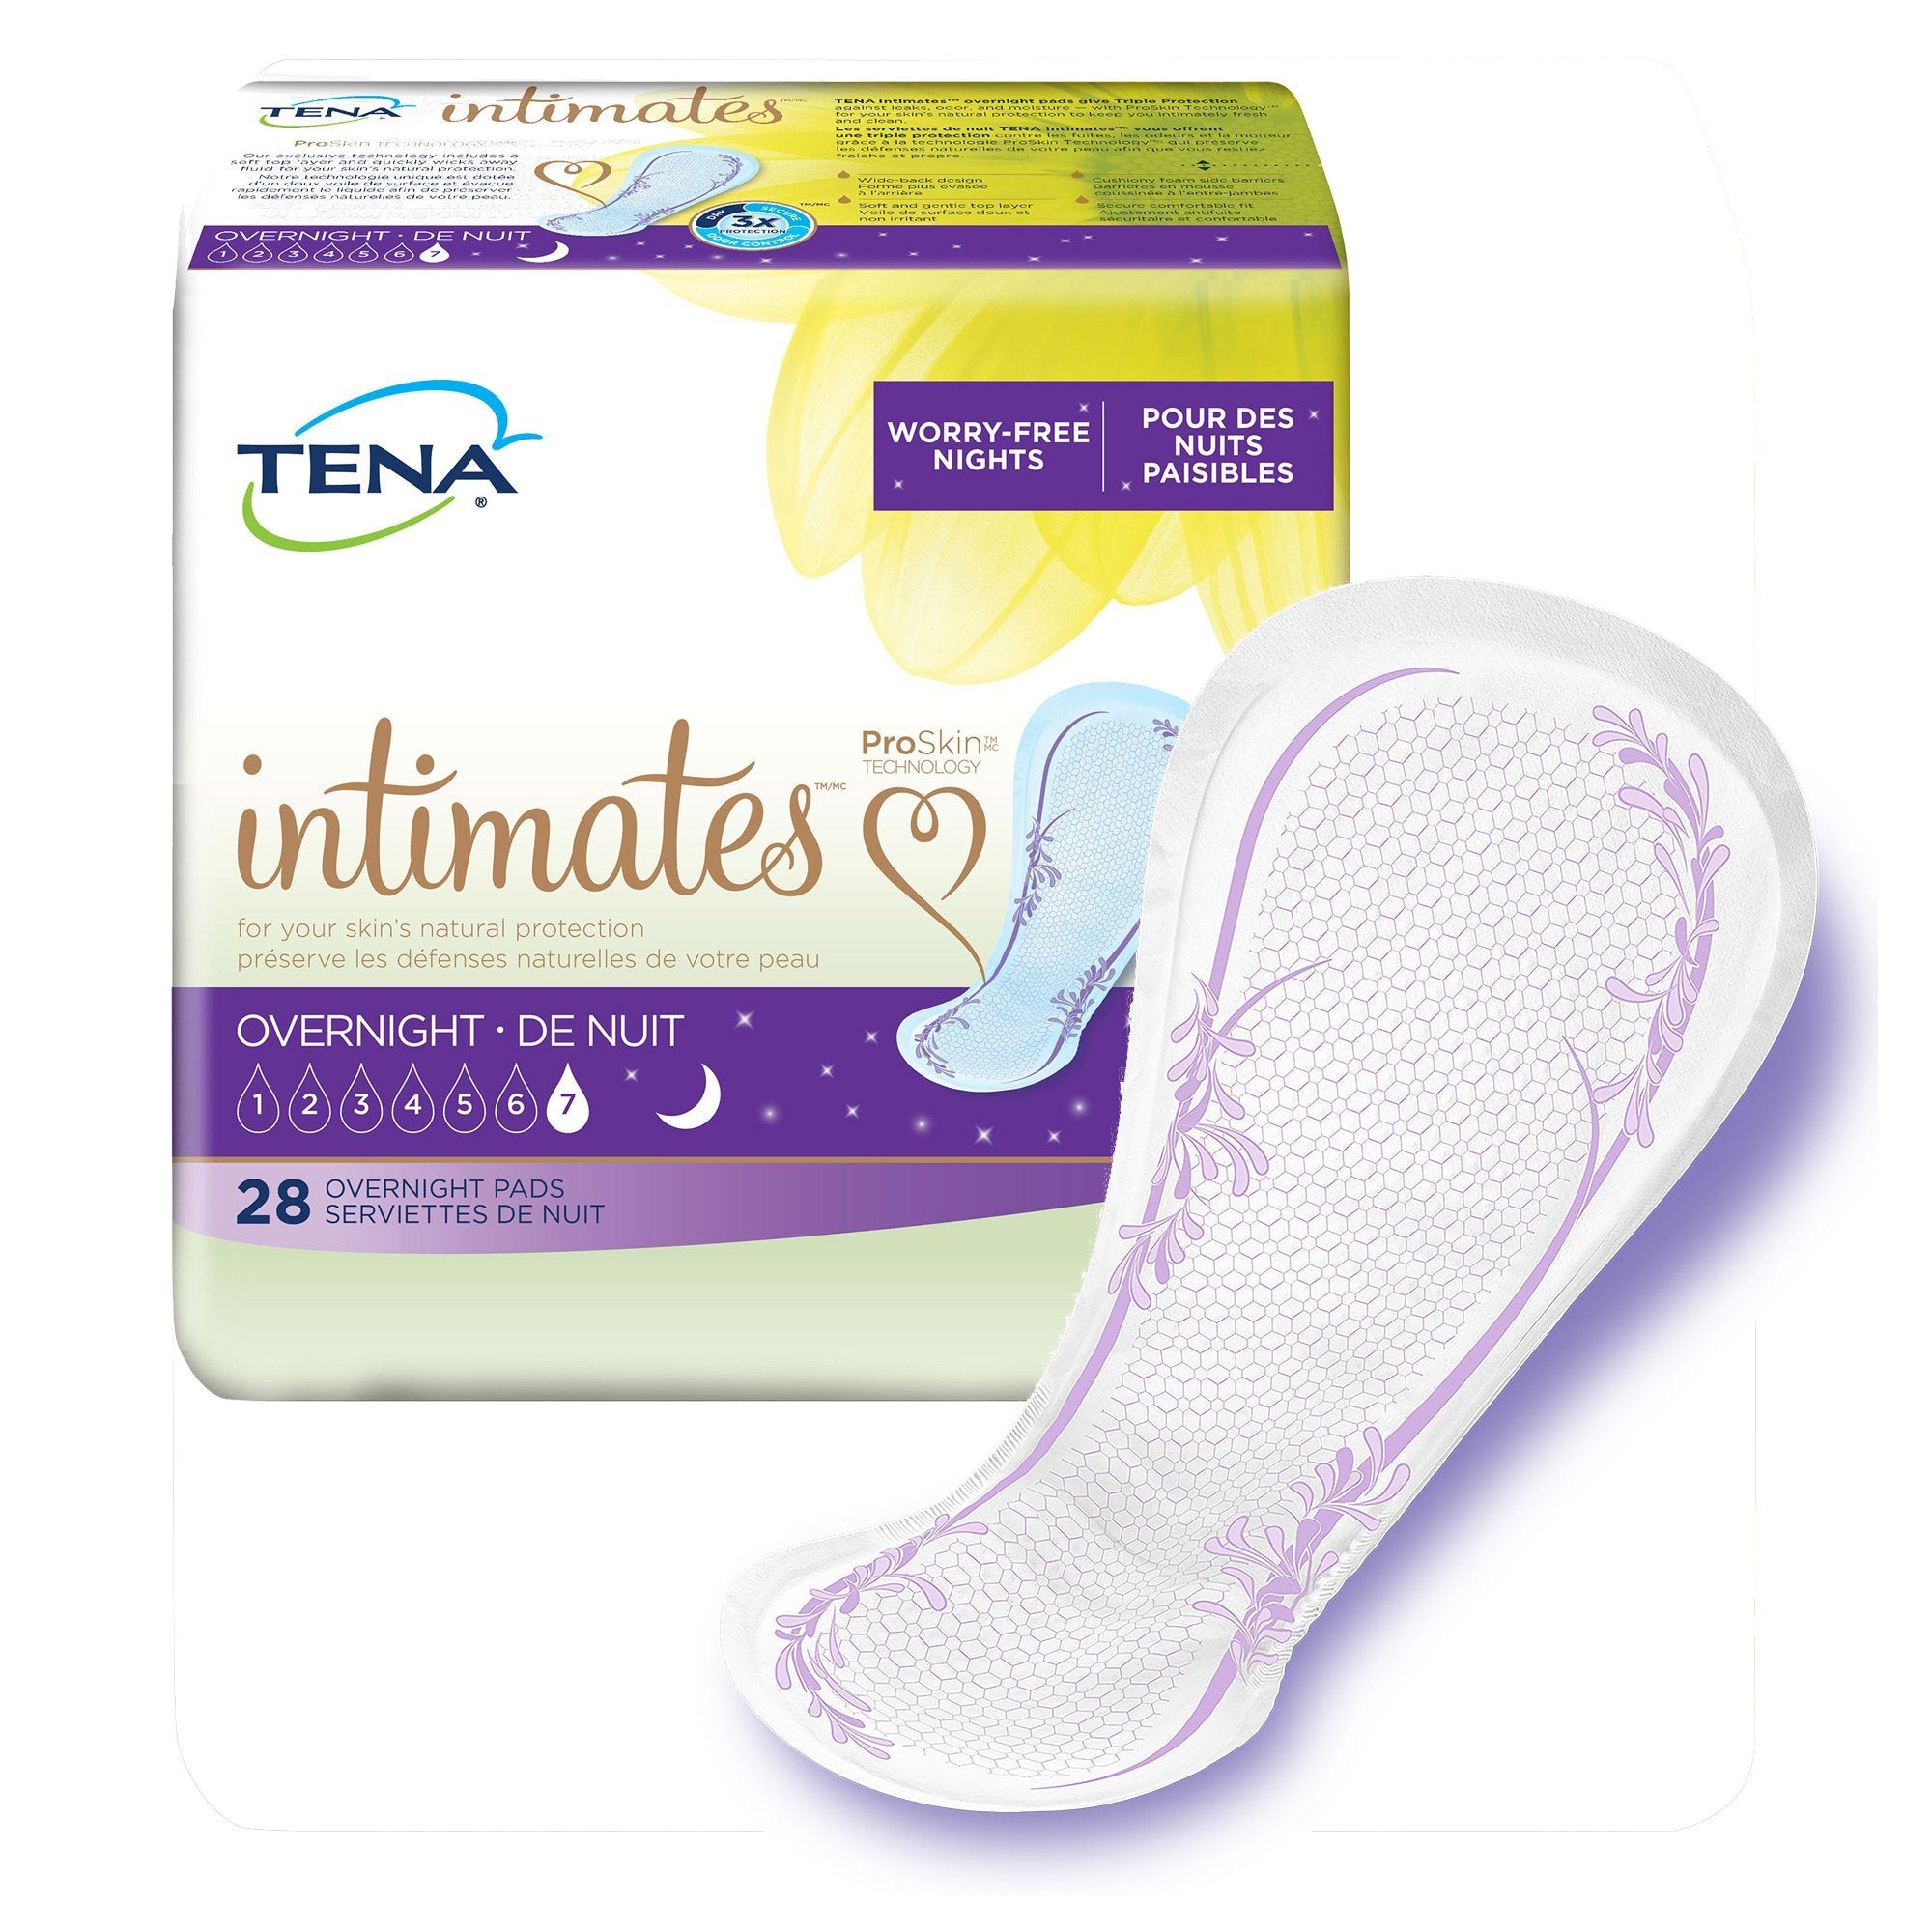 TENA Heavy Flow Pads ~ for heavy bleeding & leaking amniotic fluid